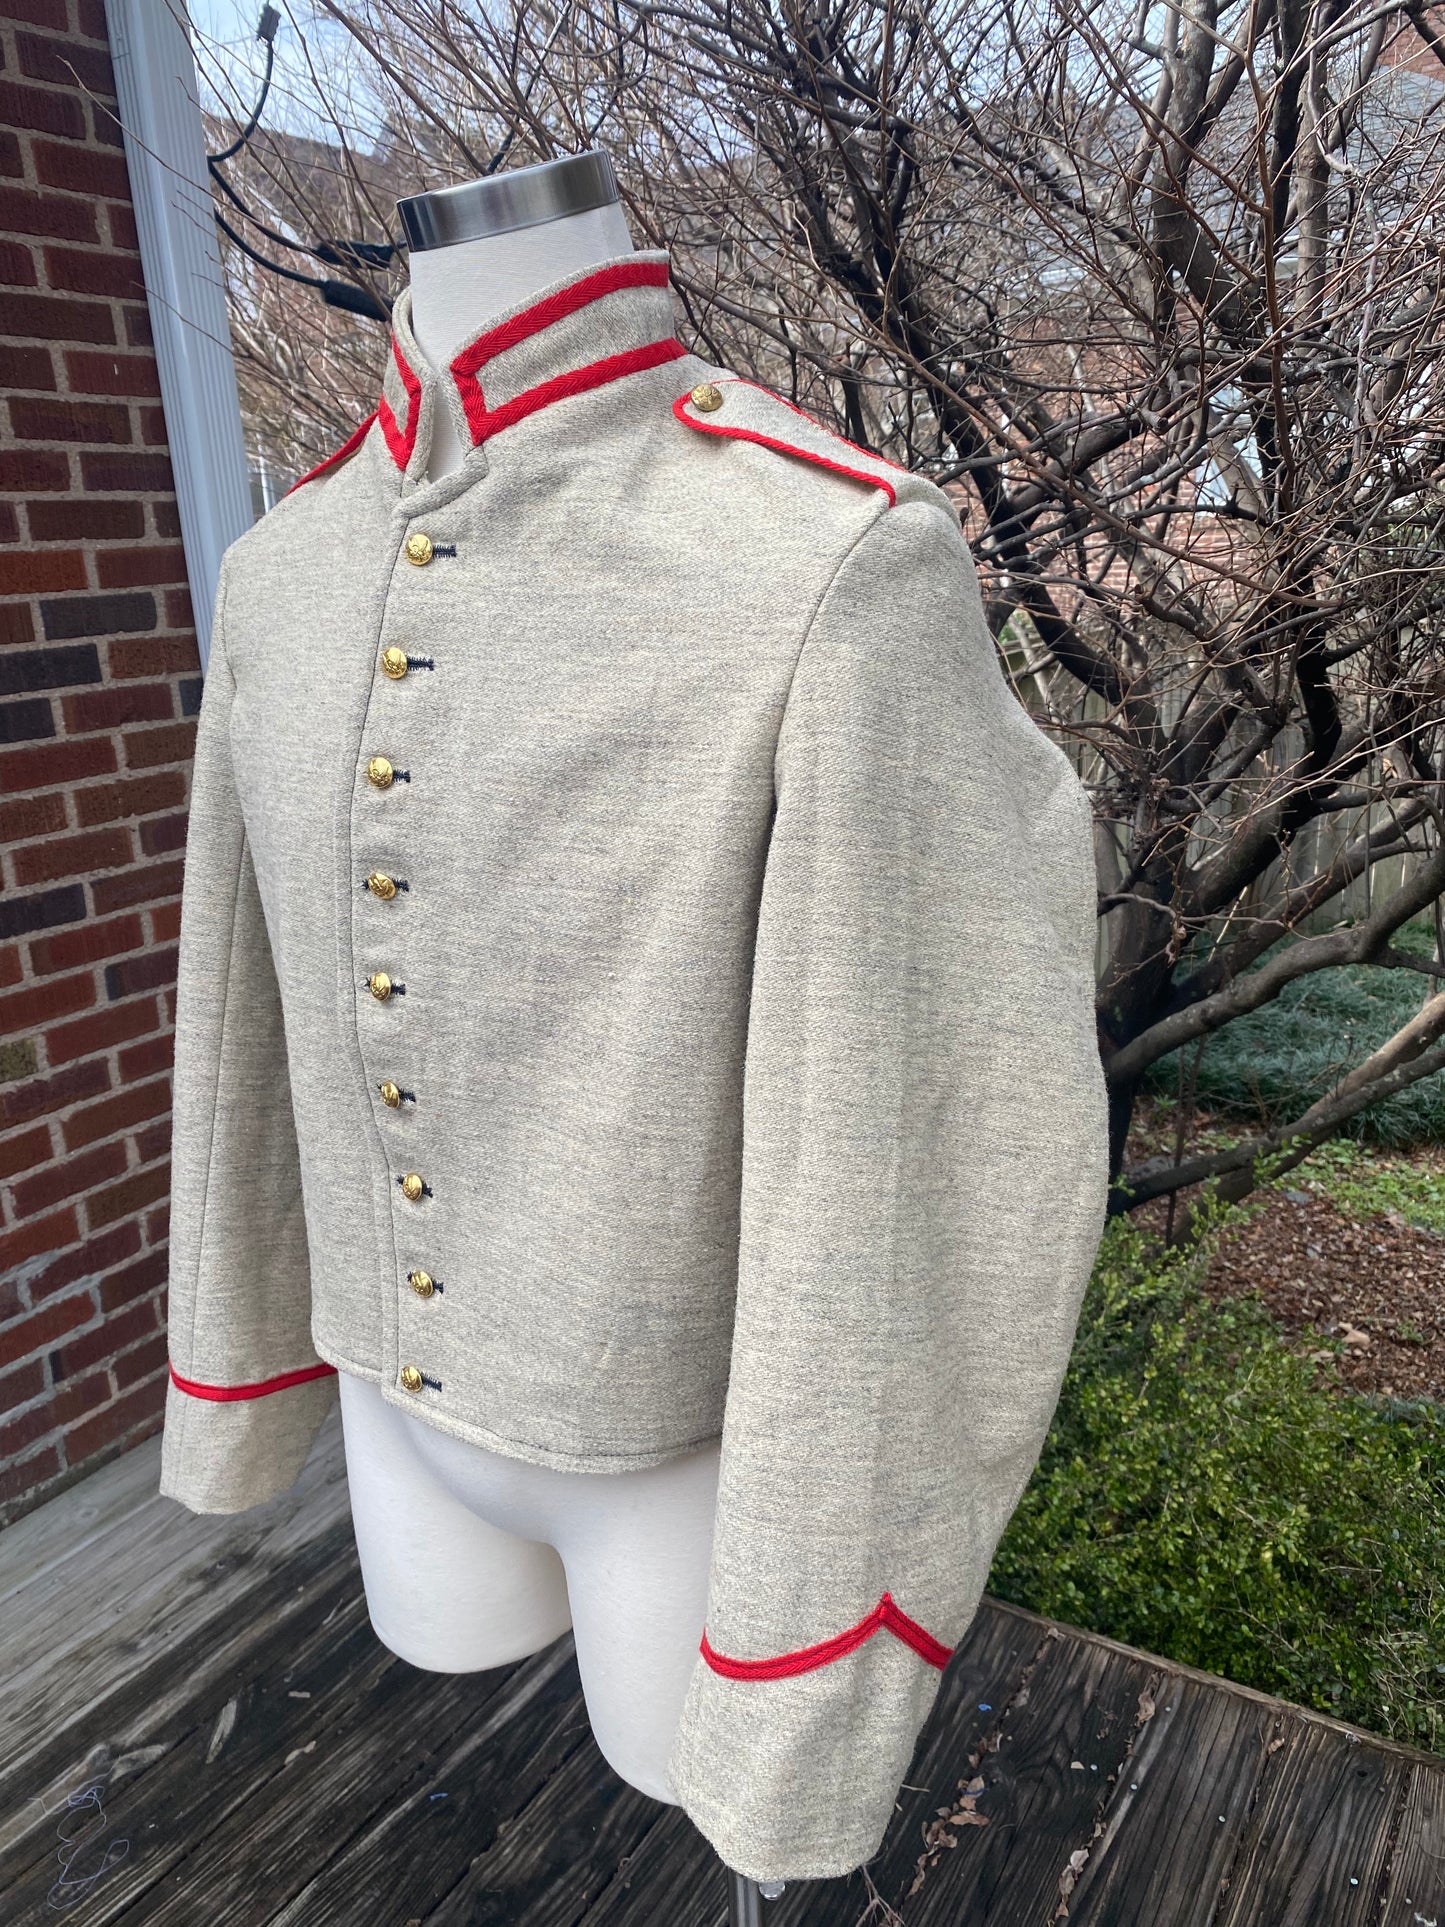 Richmond Clothing Bureau Jacket 1862